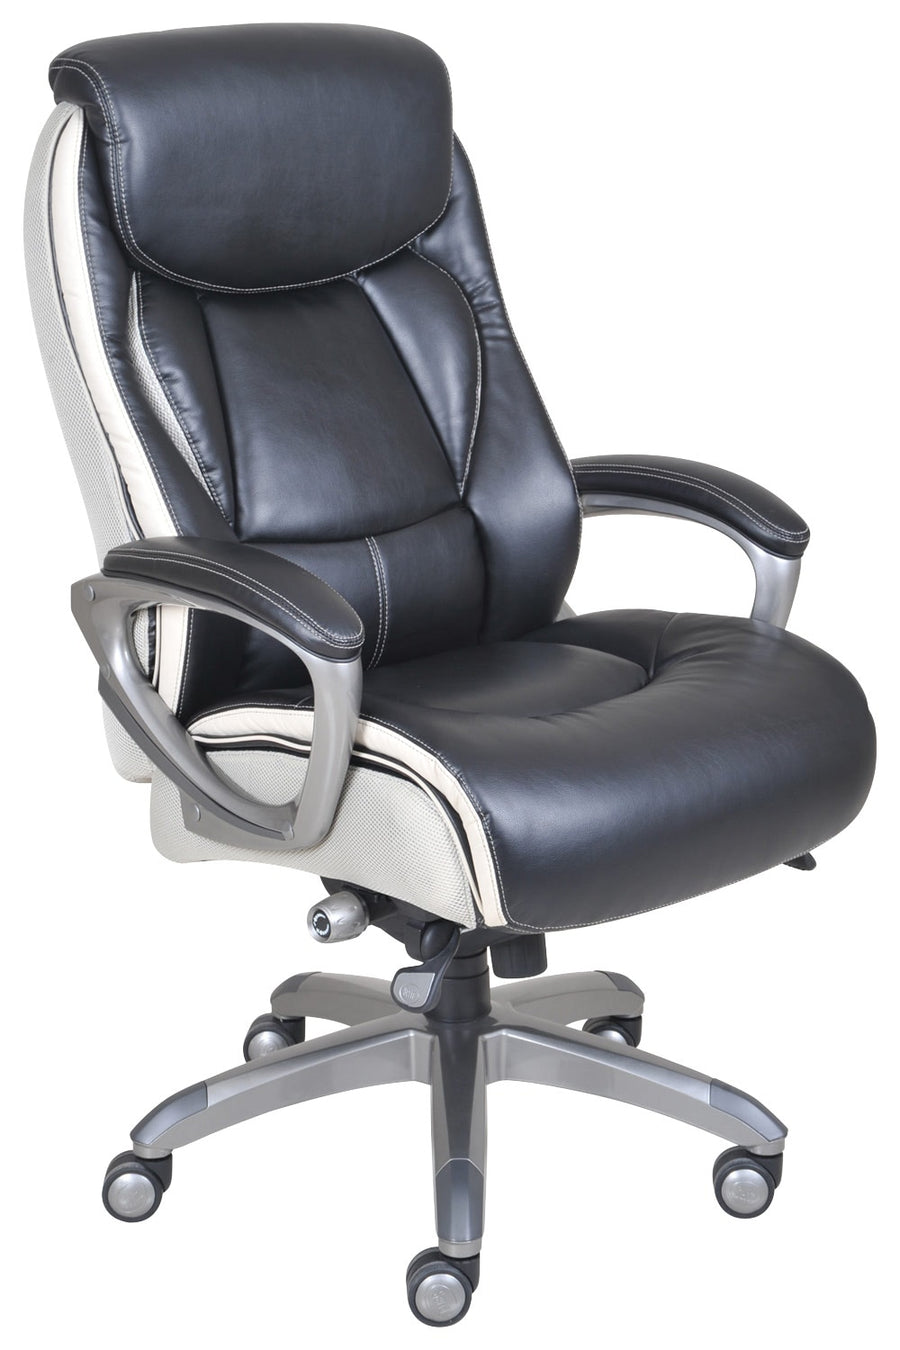 Serta - Smart Layers Leather Executive Chair - Black_0